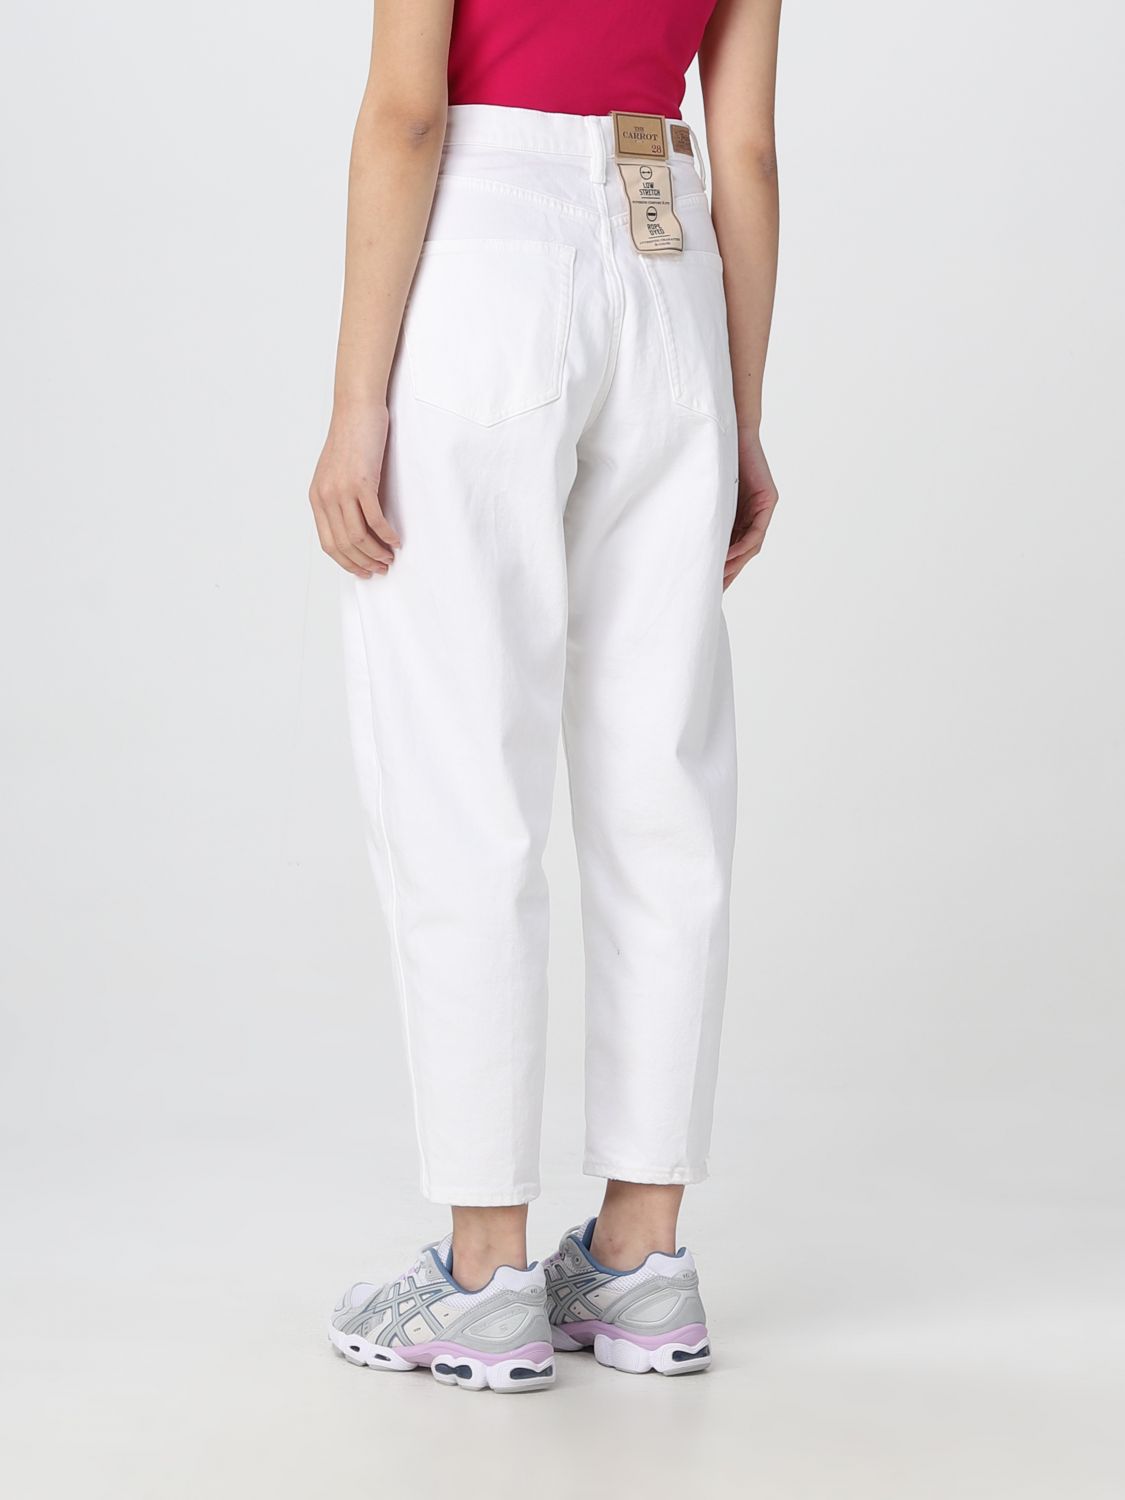 POLO RALPH LAUREN: pants for woman - White | Polo Ralph Lauren pants  211890116 online on 